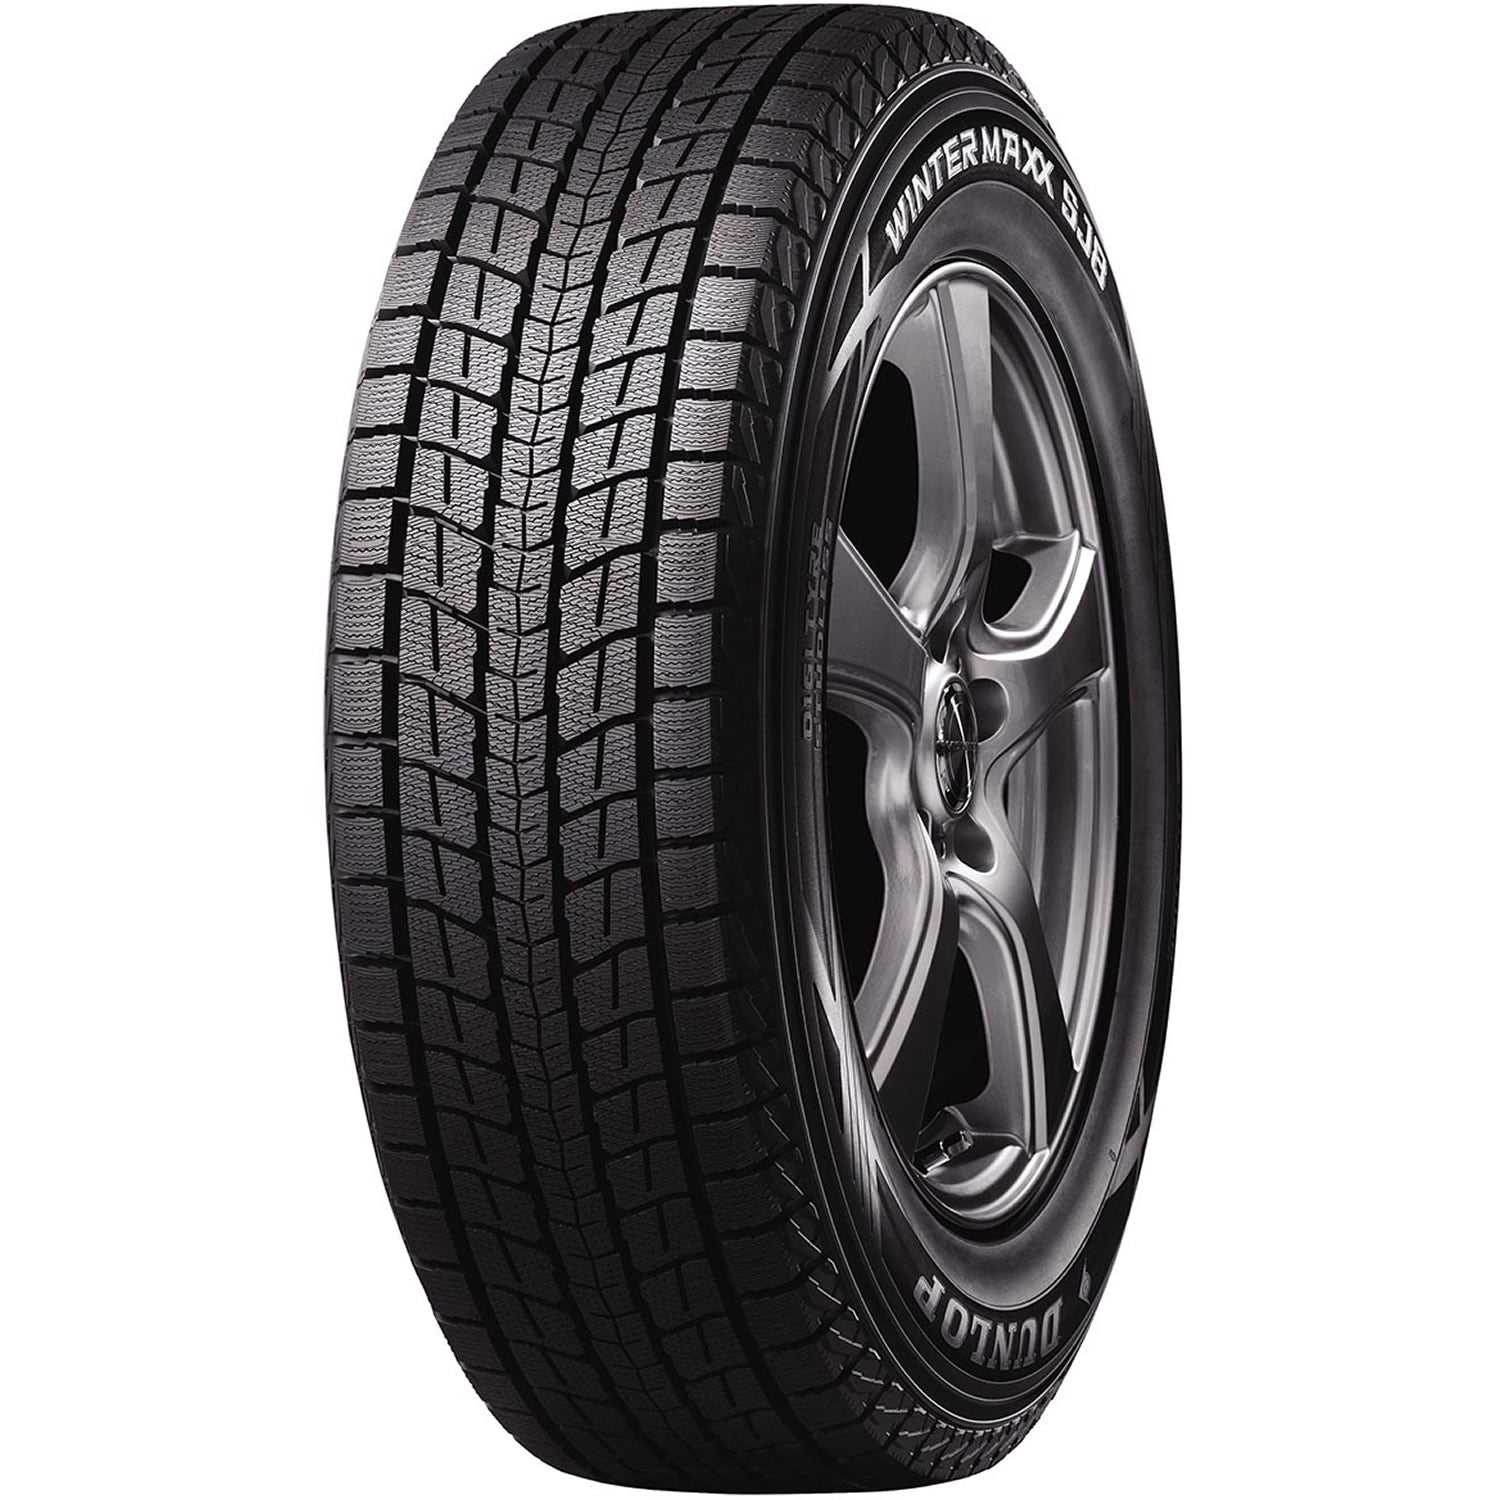 DUNLOP WINTER MAXX SJ8 245/70R16 (29.5X9.7R 16) Tires